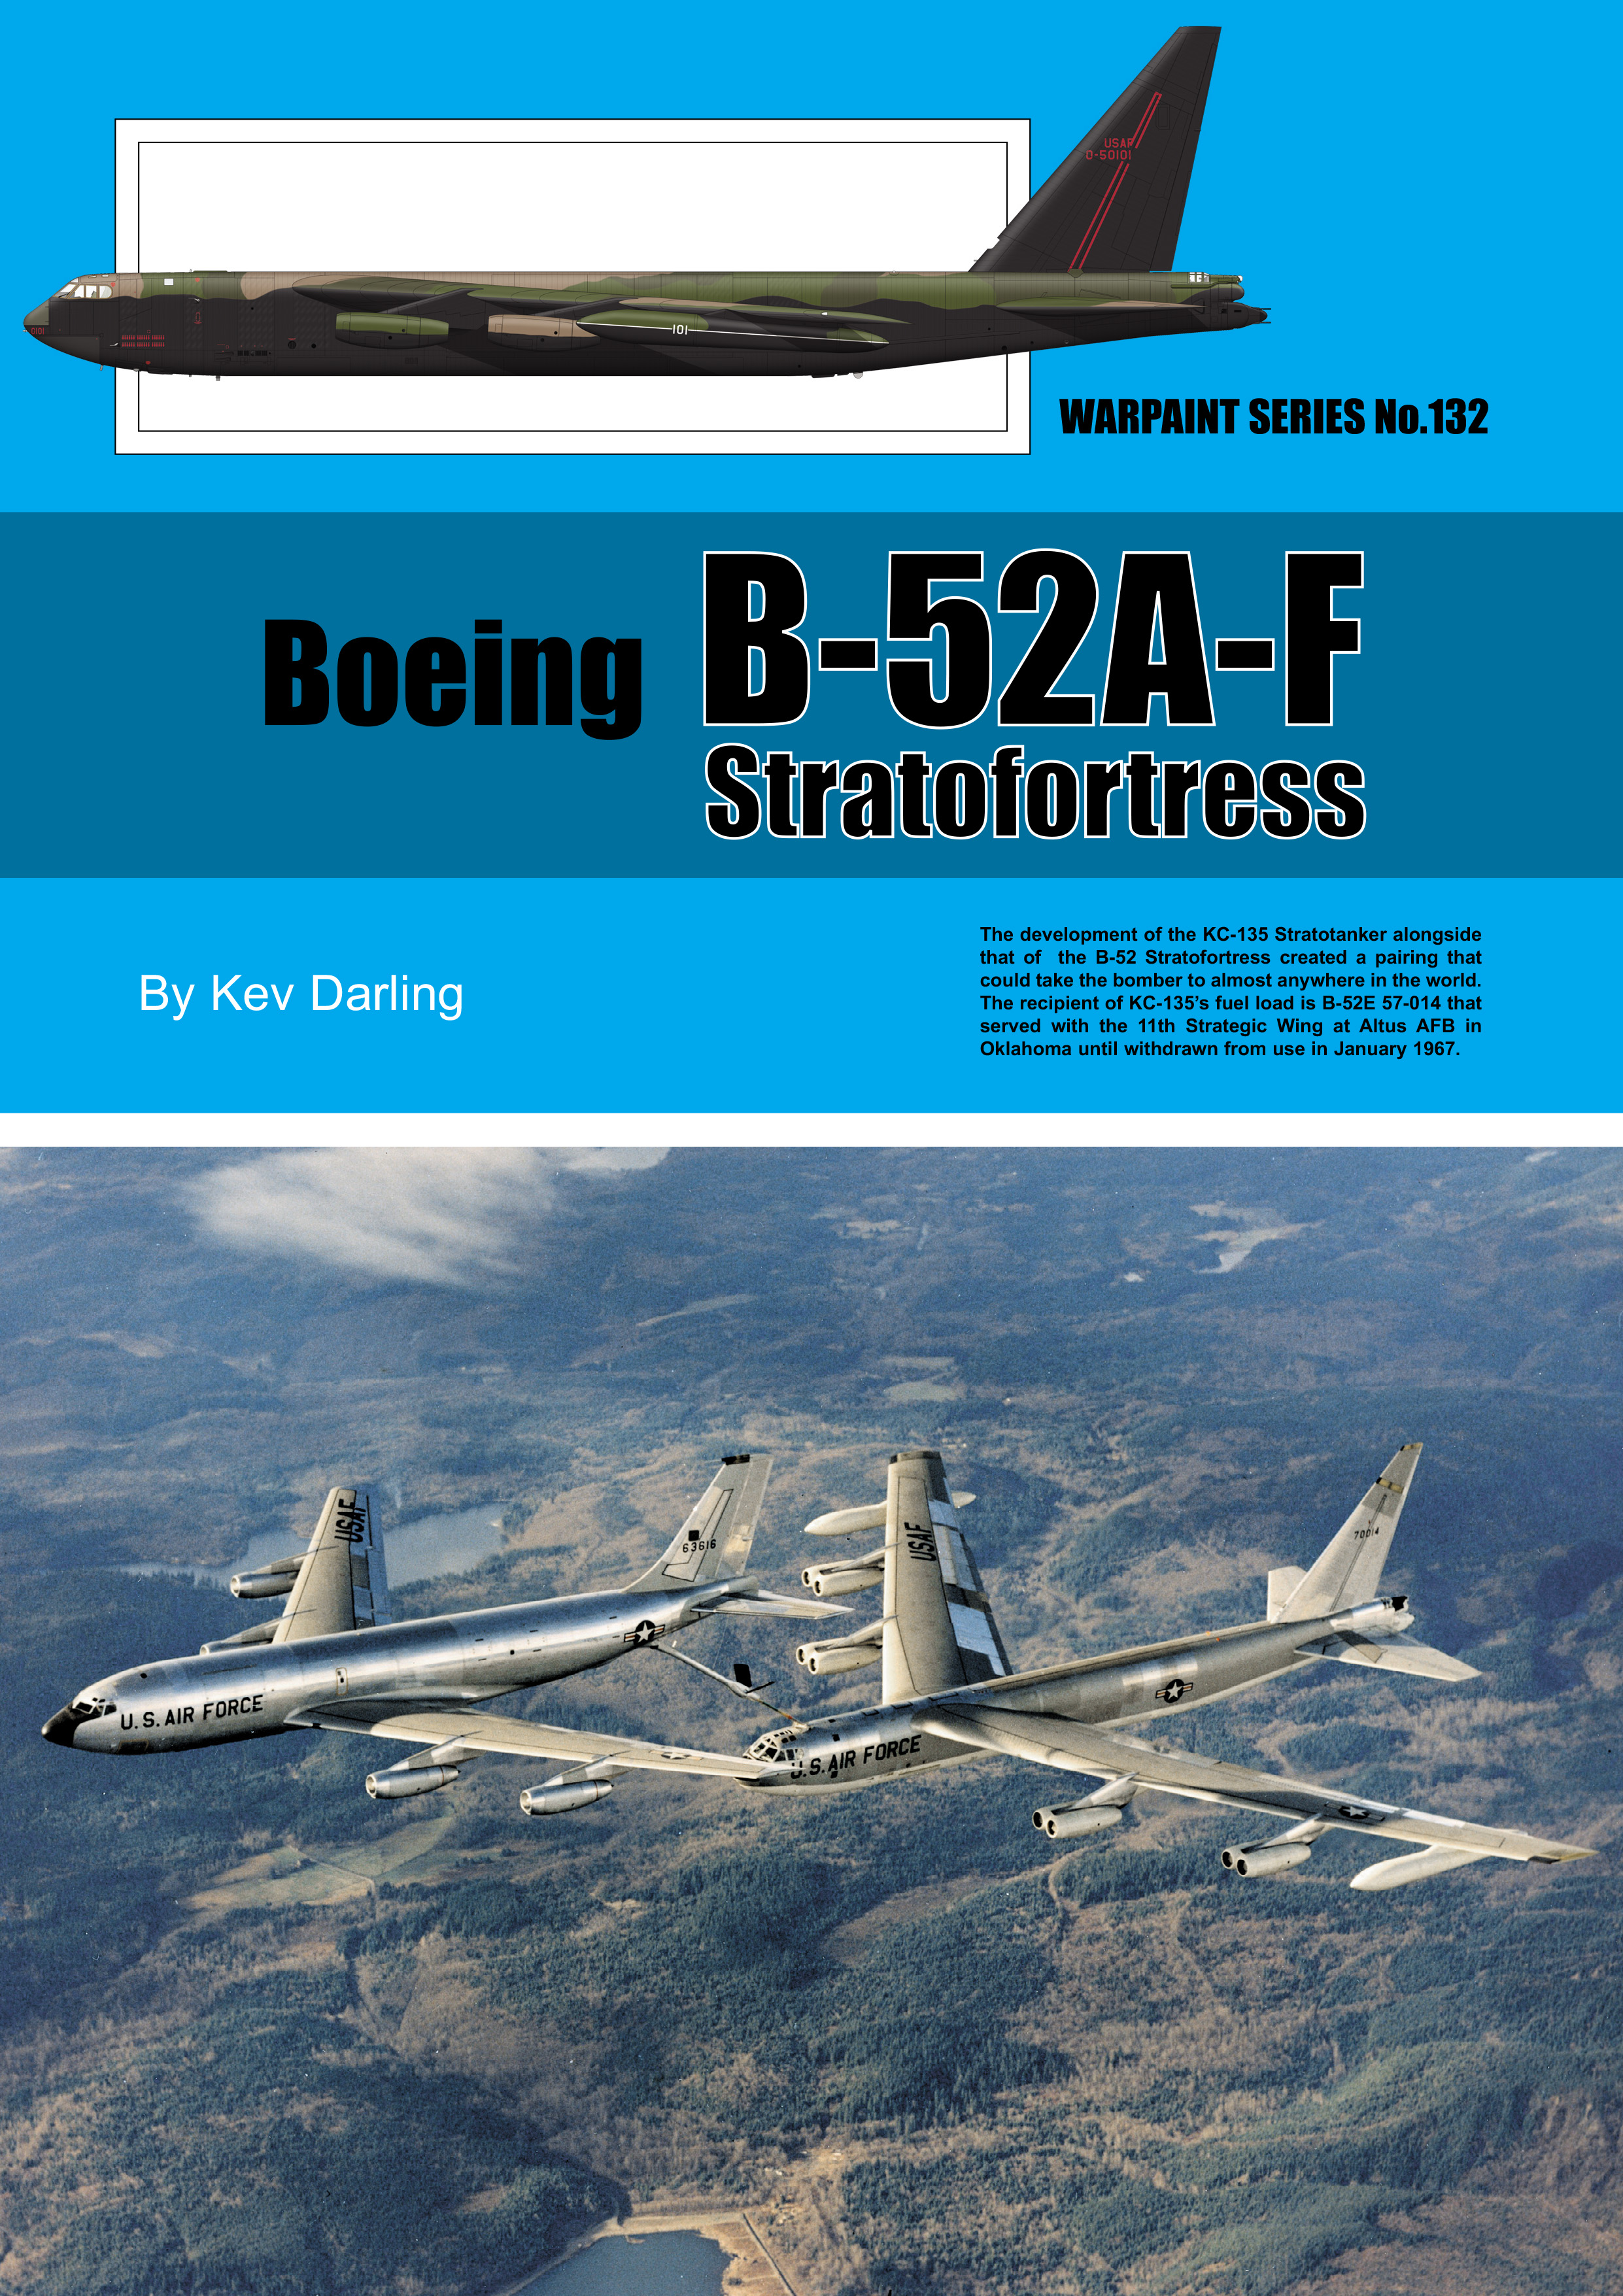 Guideline Publications Ltd Warpaint 132 - B52A-F Boeing B-52A-F 